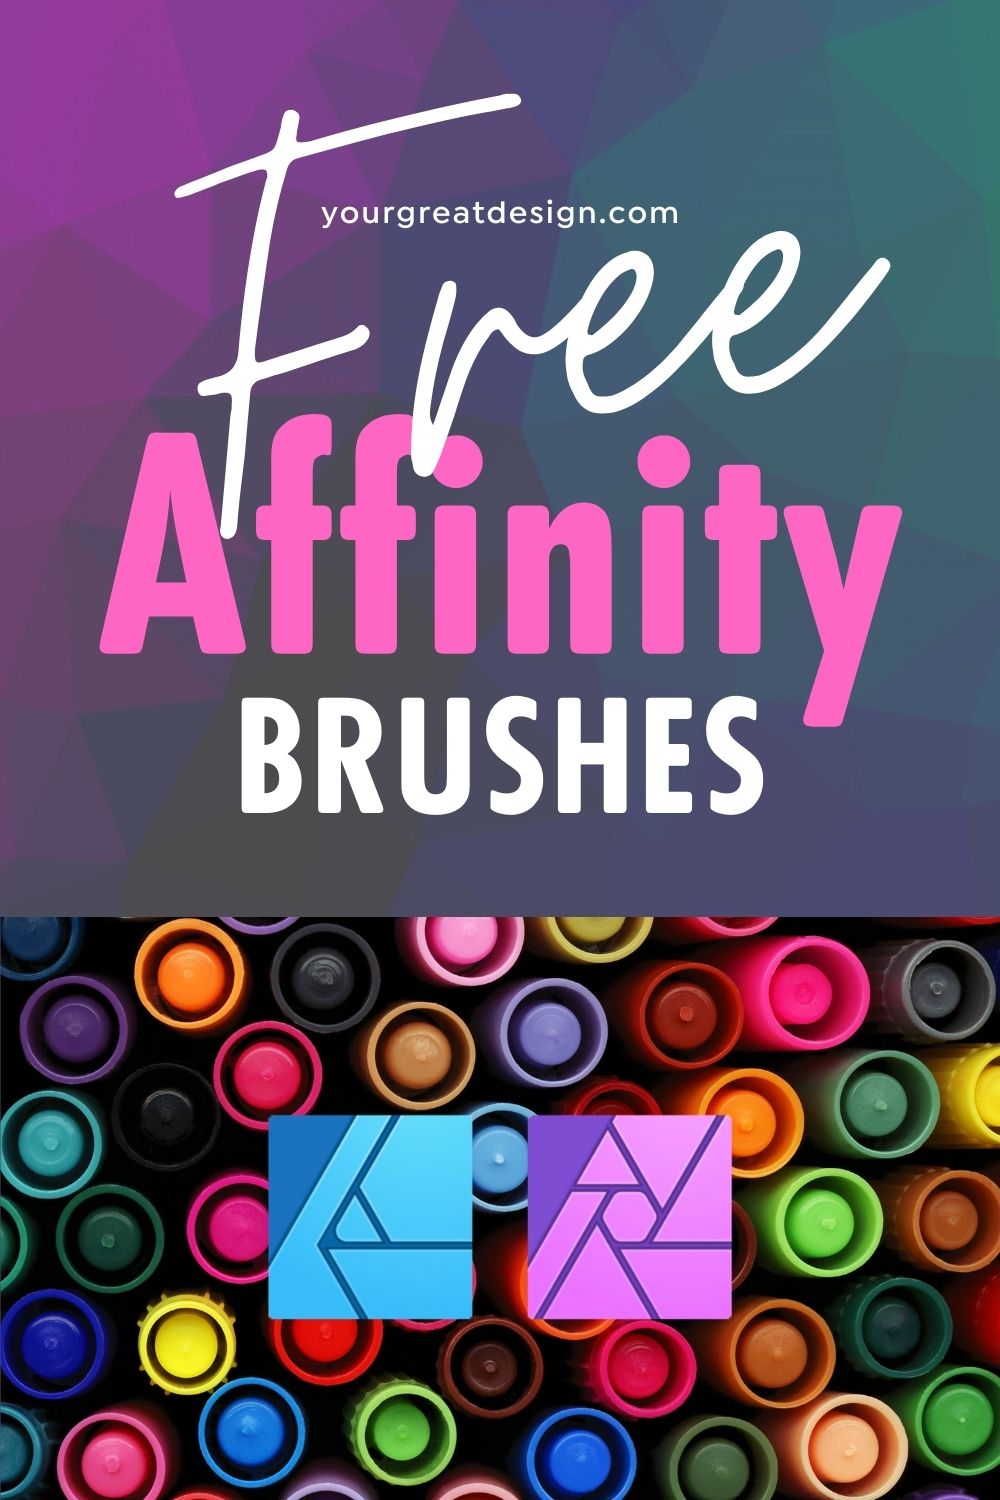 How to convert Adobe Photoshop Brushes to Affinity Designer Brushes